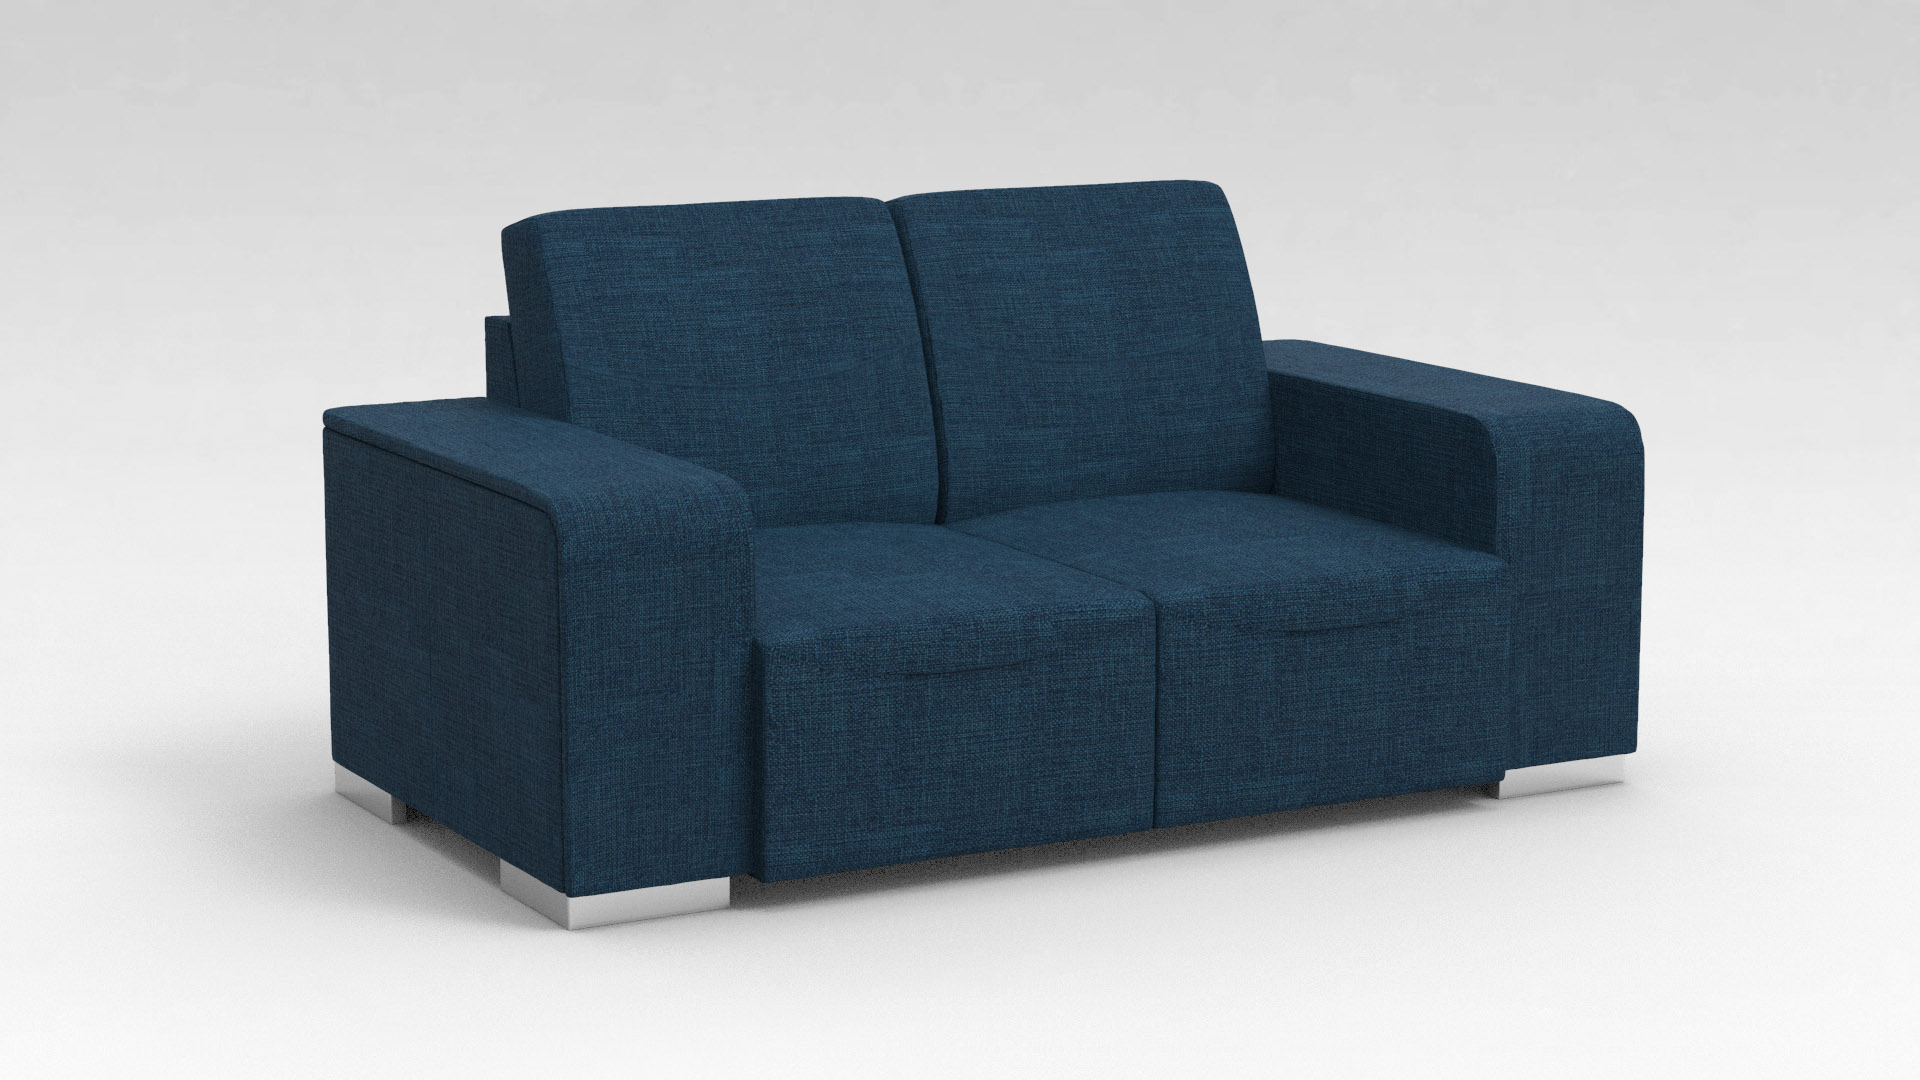 Canapé design 2 places en tissu bleu Sofiane